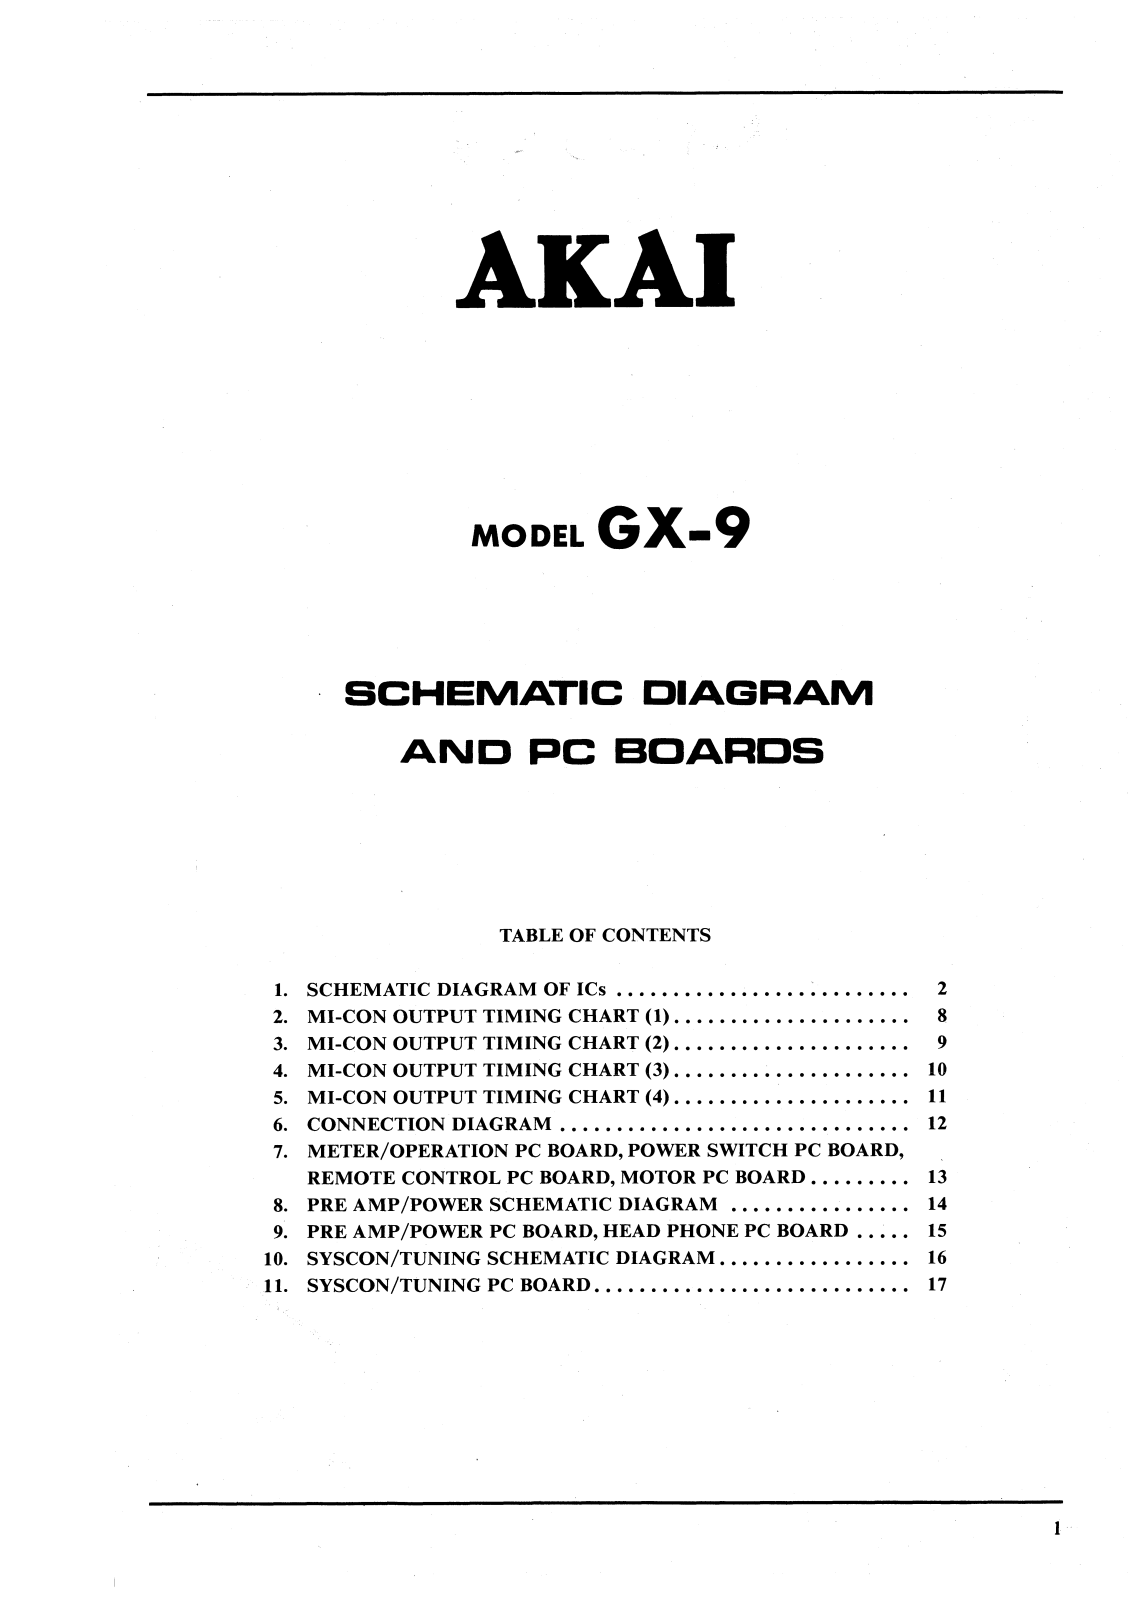 Akai GX-9 Service manual